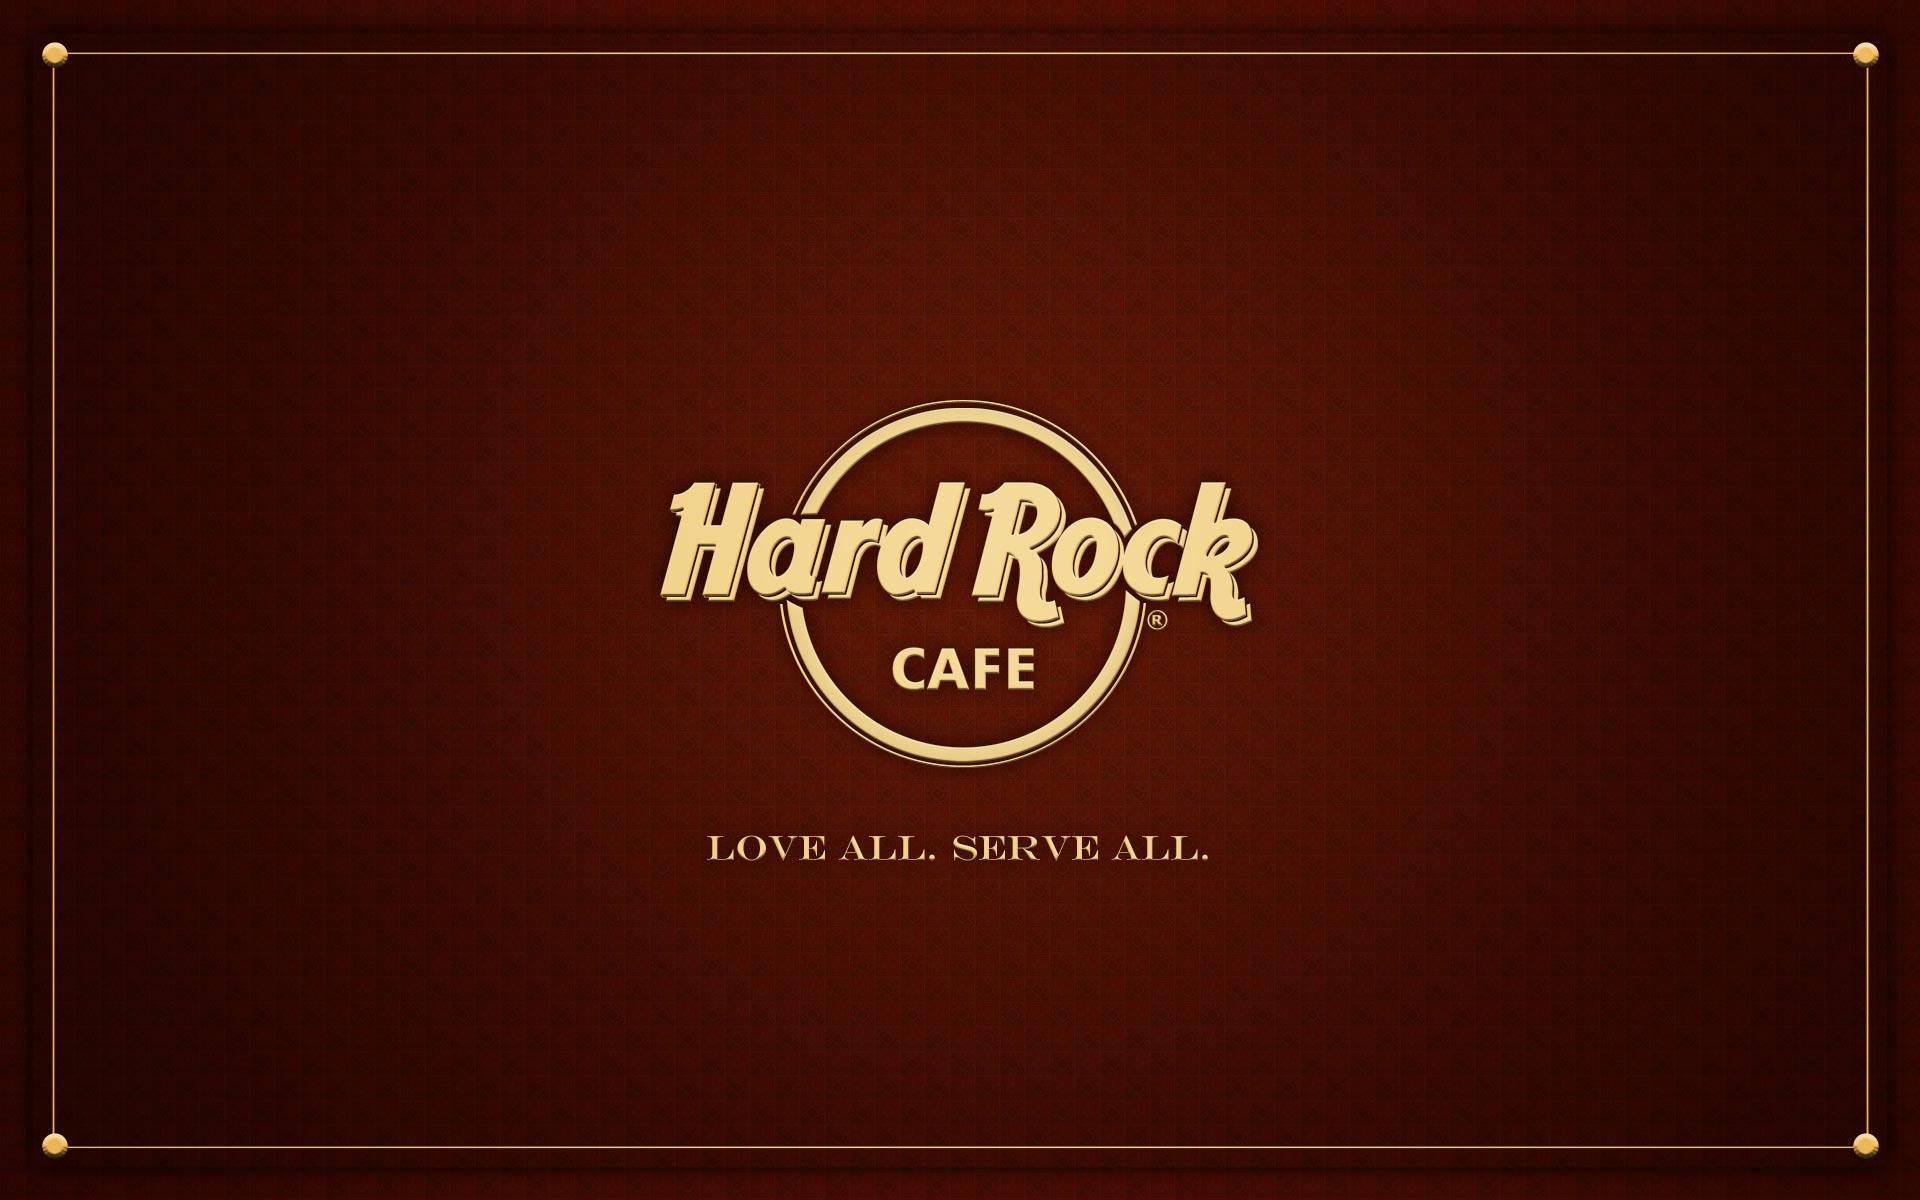 Hard Rock Cafe wallpaper